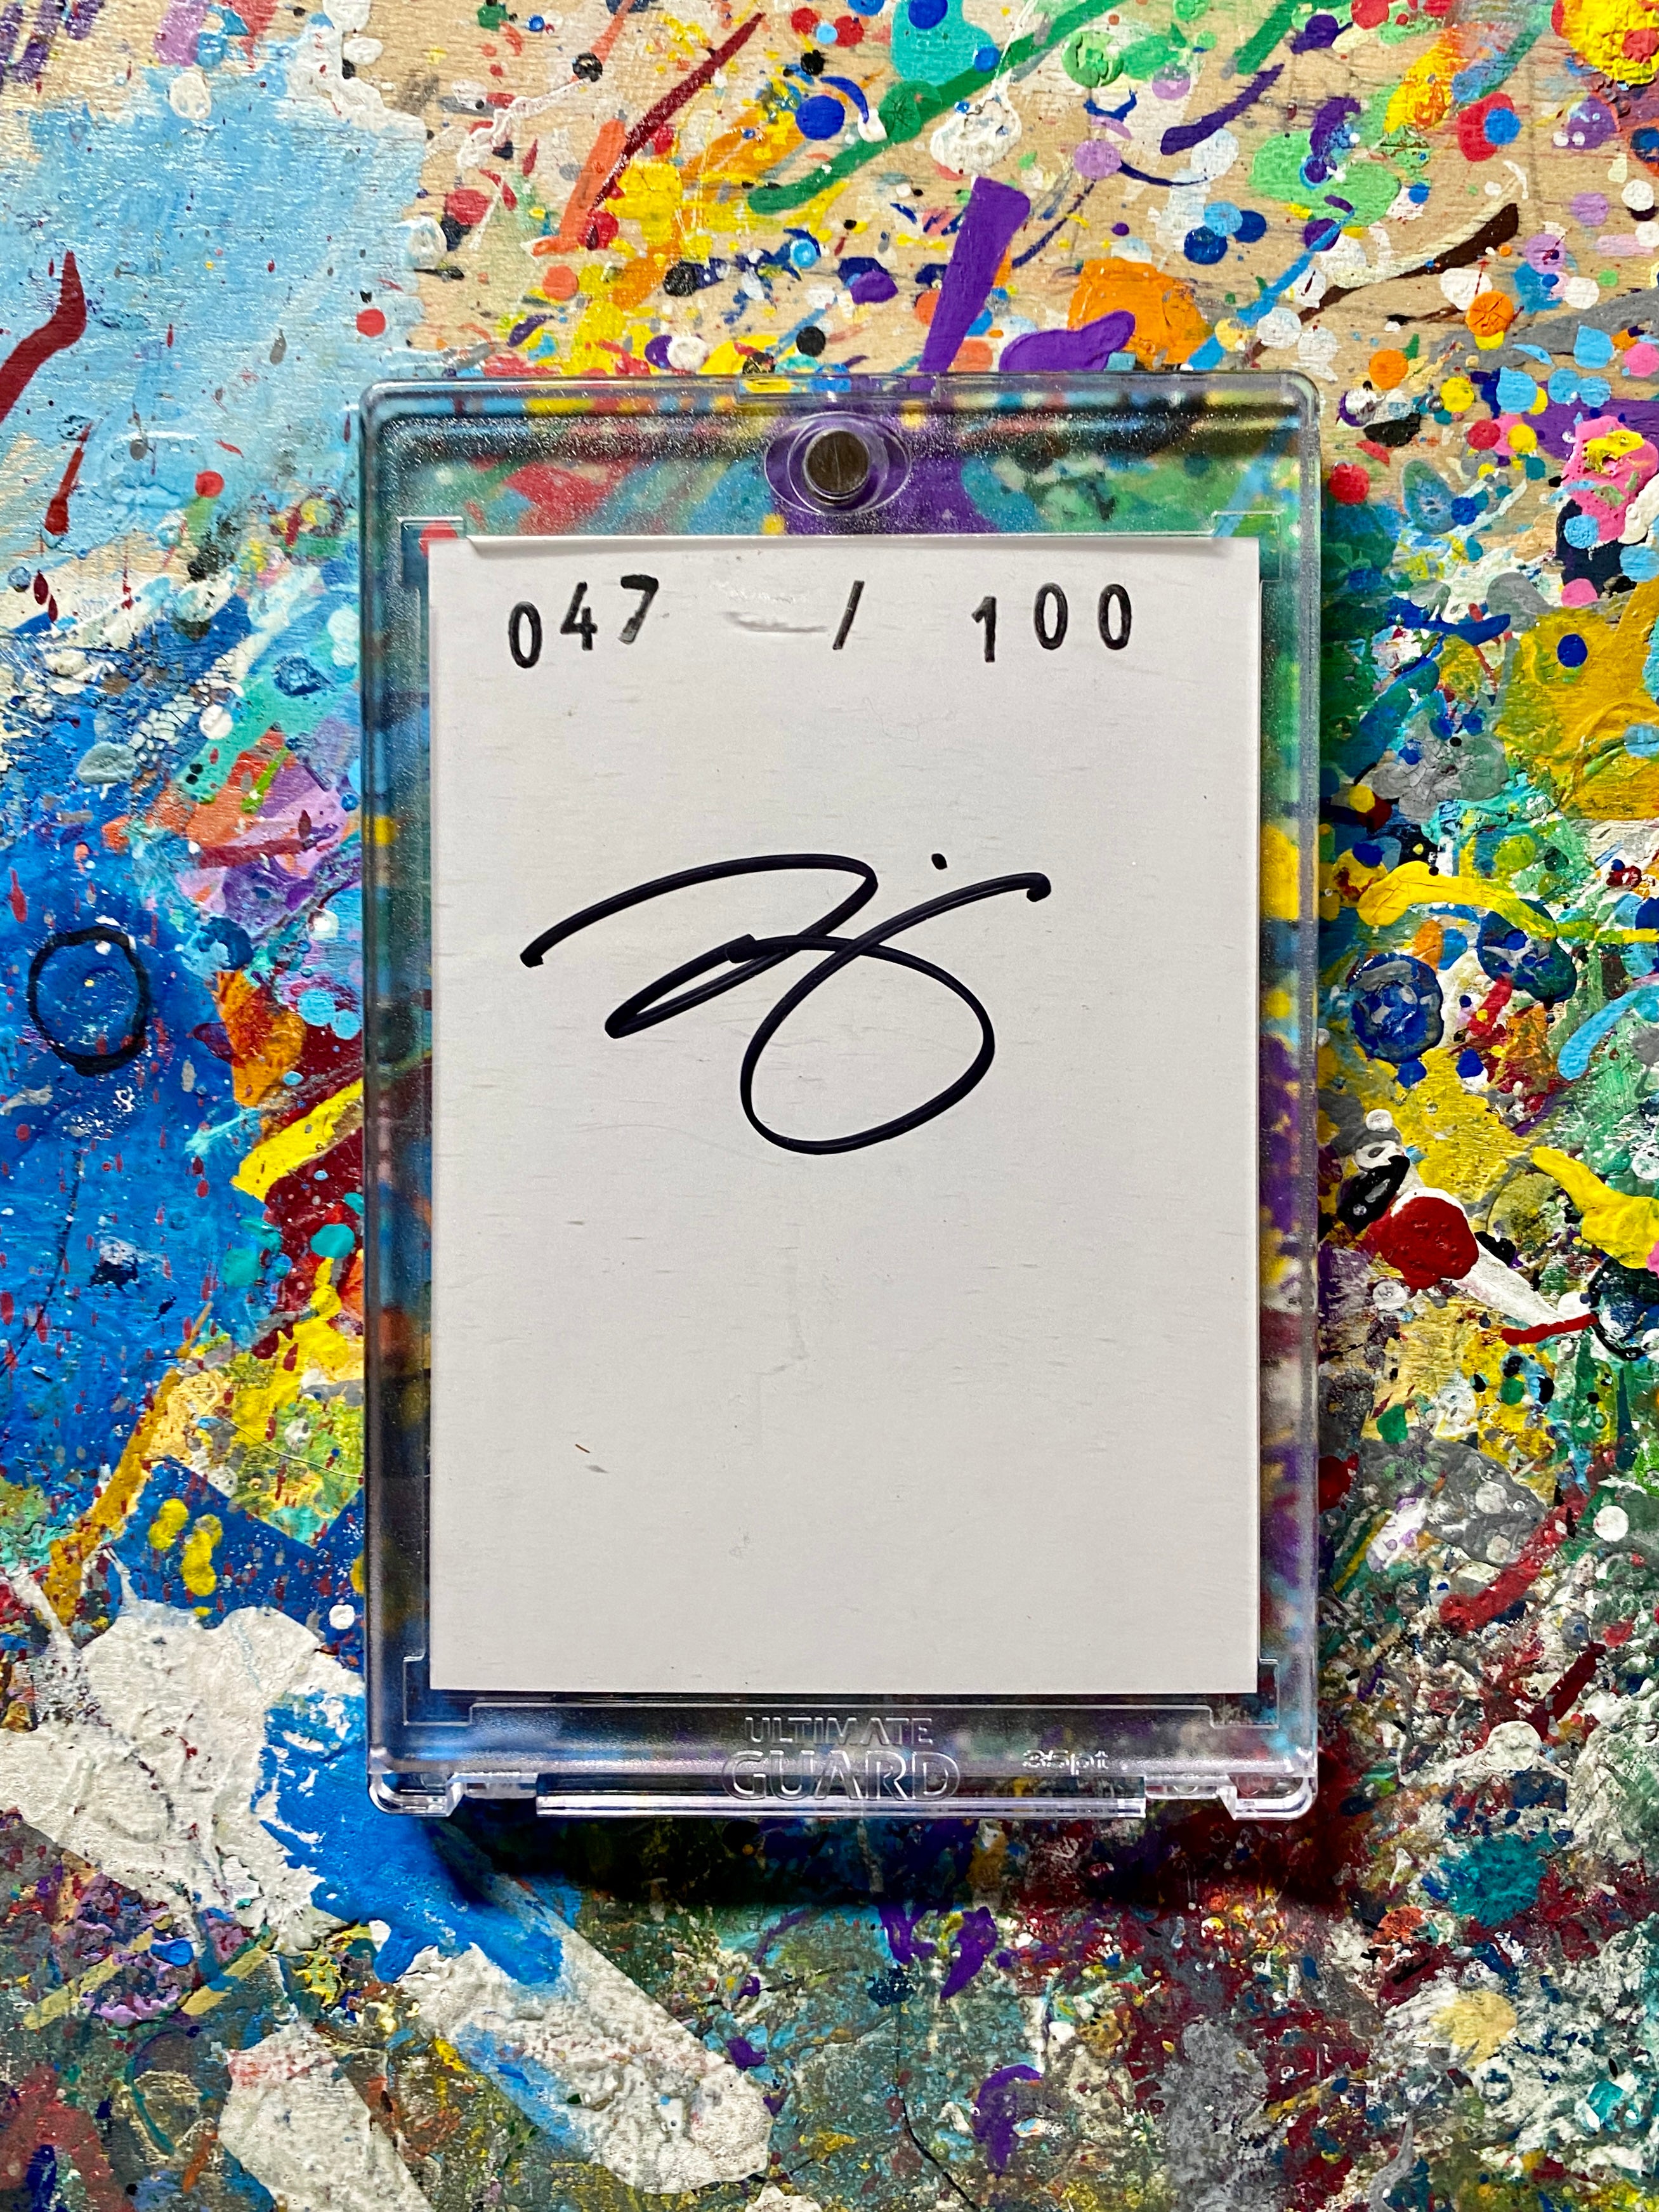 “Ueck” Bob Uecker Art Card Andy Friedman x Luke the Cardist (/100)